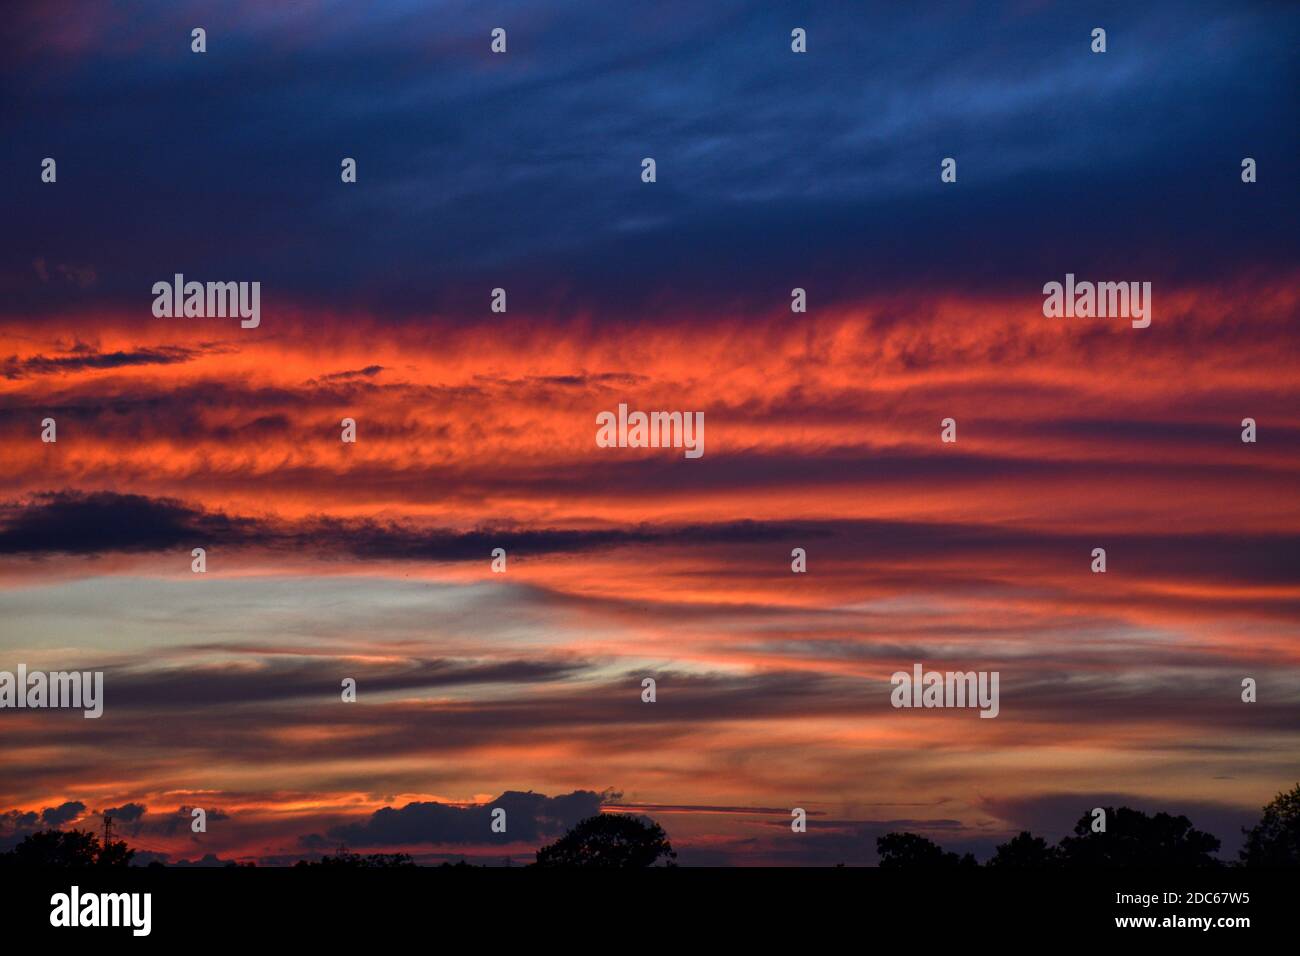 Wolkendecke, Sonnenuntergang, Sonnenaufgang, Abendrot, Morgenrot, Dämmerung, Abenddämmerung, Morgendämmerung, Himmel, Wolken, leuchten, Strahlen, Blau Stock Photo